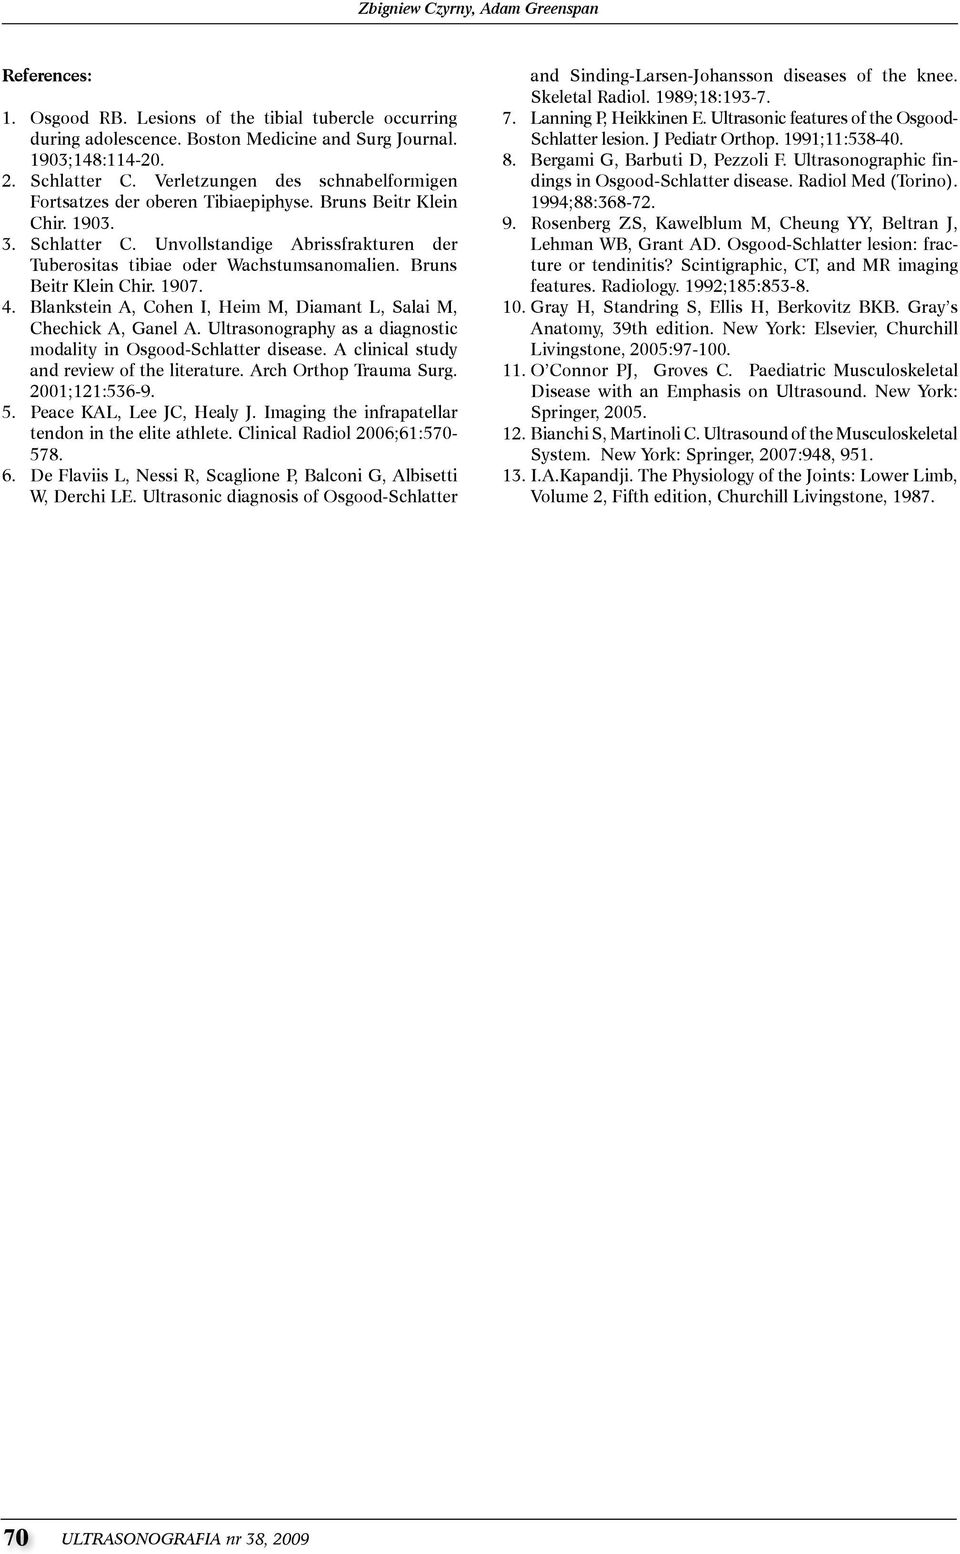 Bruns Beitr klein chir. 1907. 4. Blankstein a, cohen i, Heim M, Diamant l, salai M, chechick a, ganel a. Ultrasonography as a diagnostic modality in osgood-schlatter disease.